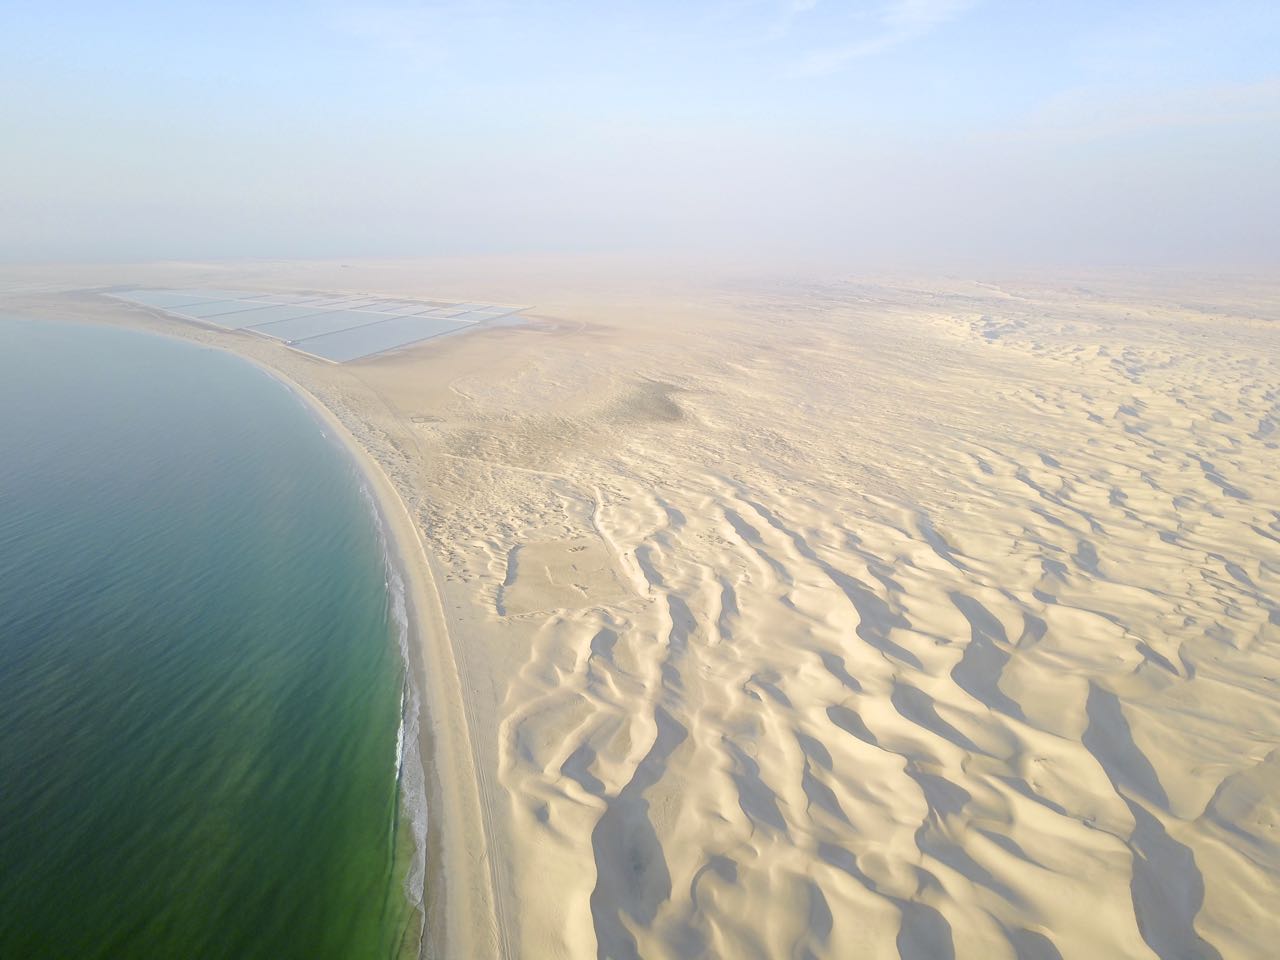 Drone Pic of Sugar Dunes in Oman